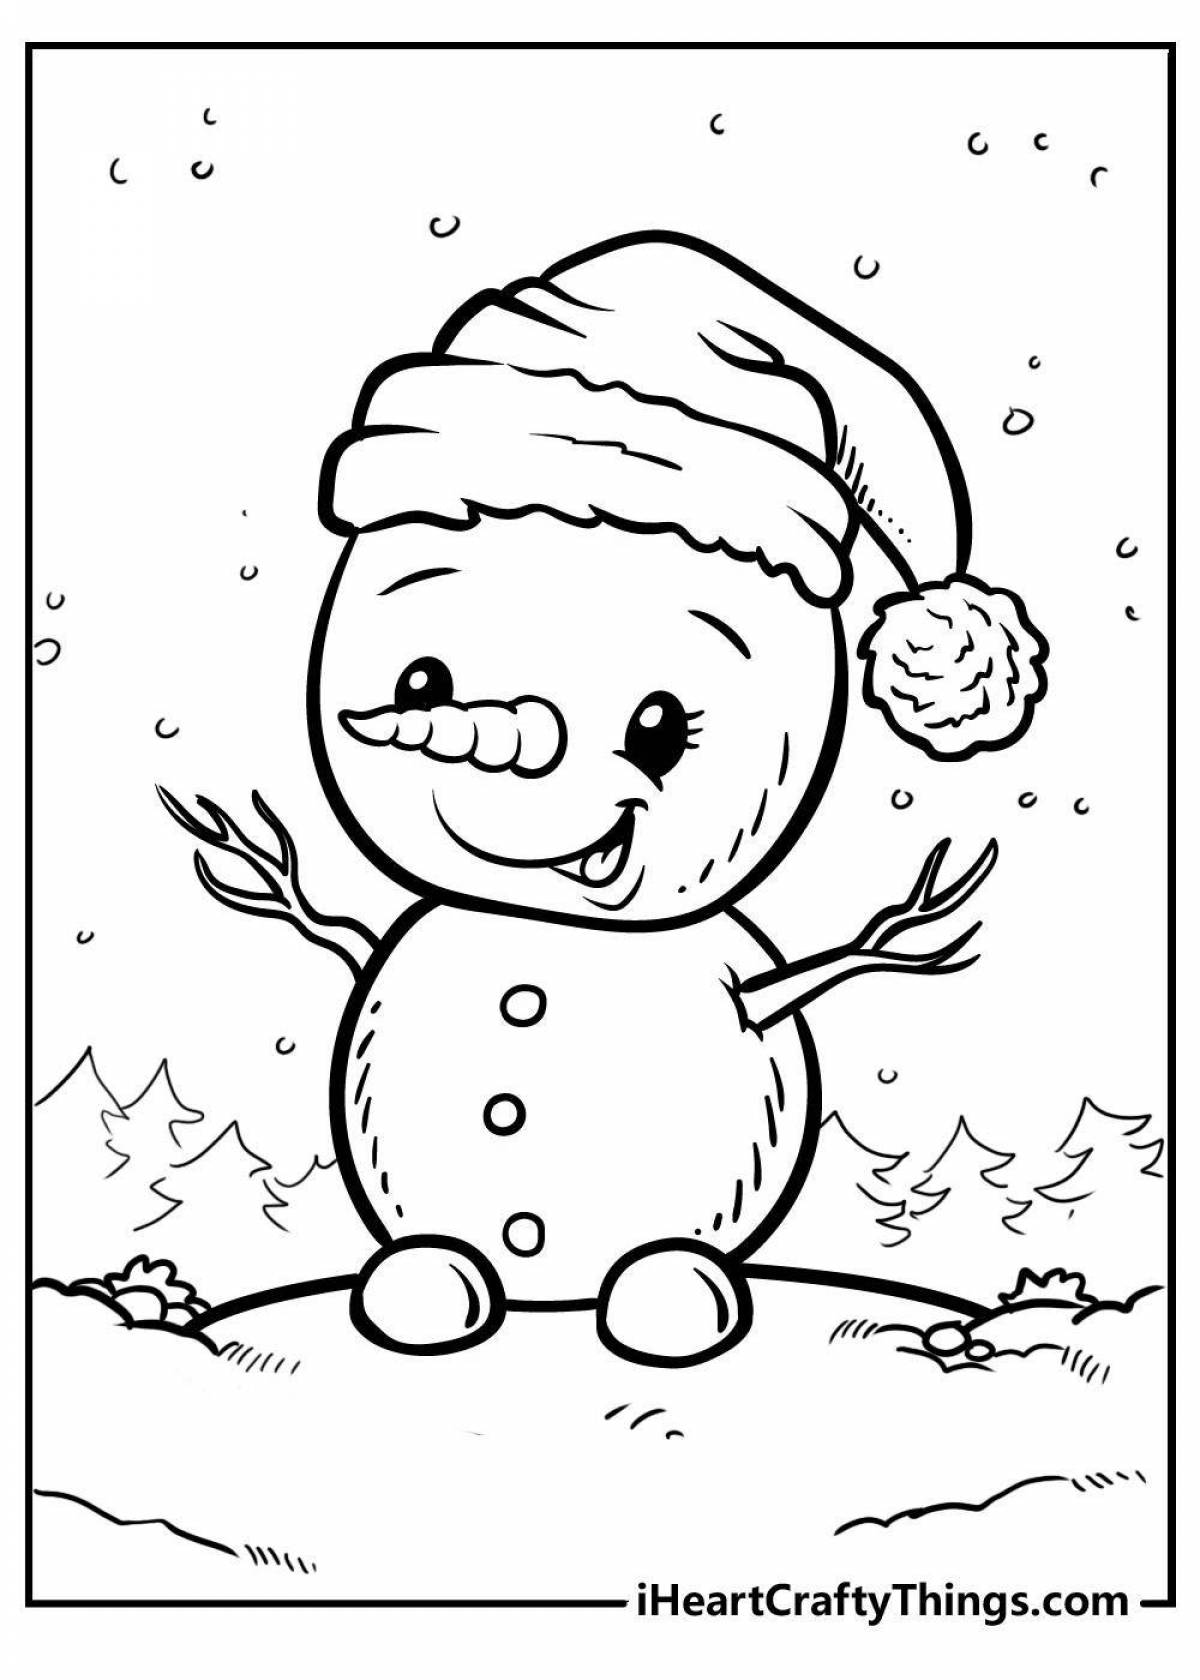 Playful snowman coloring book